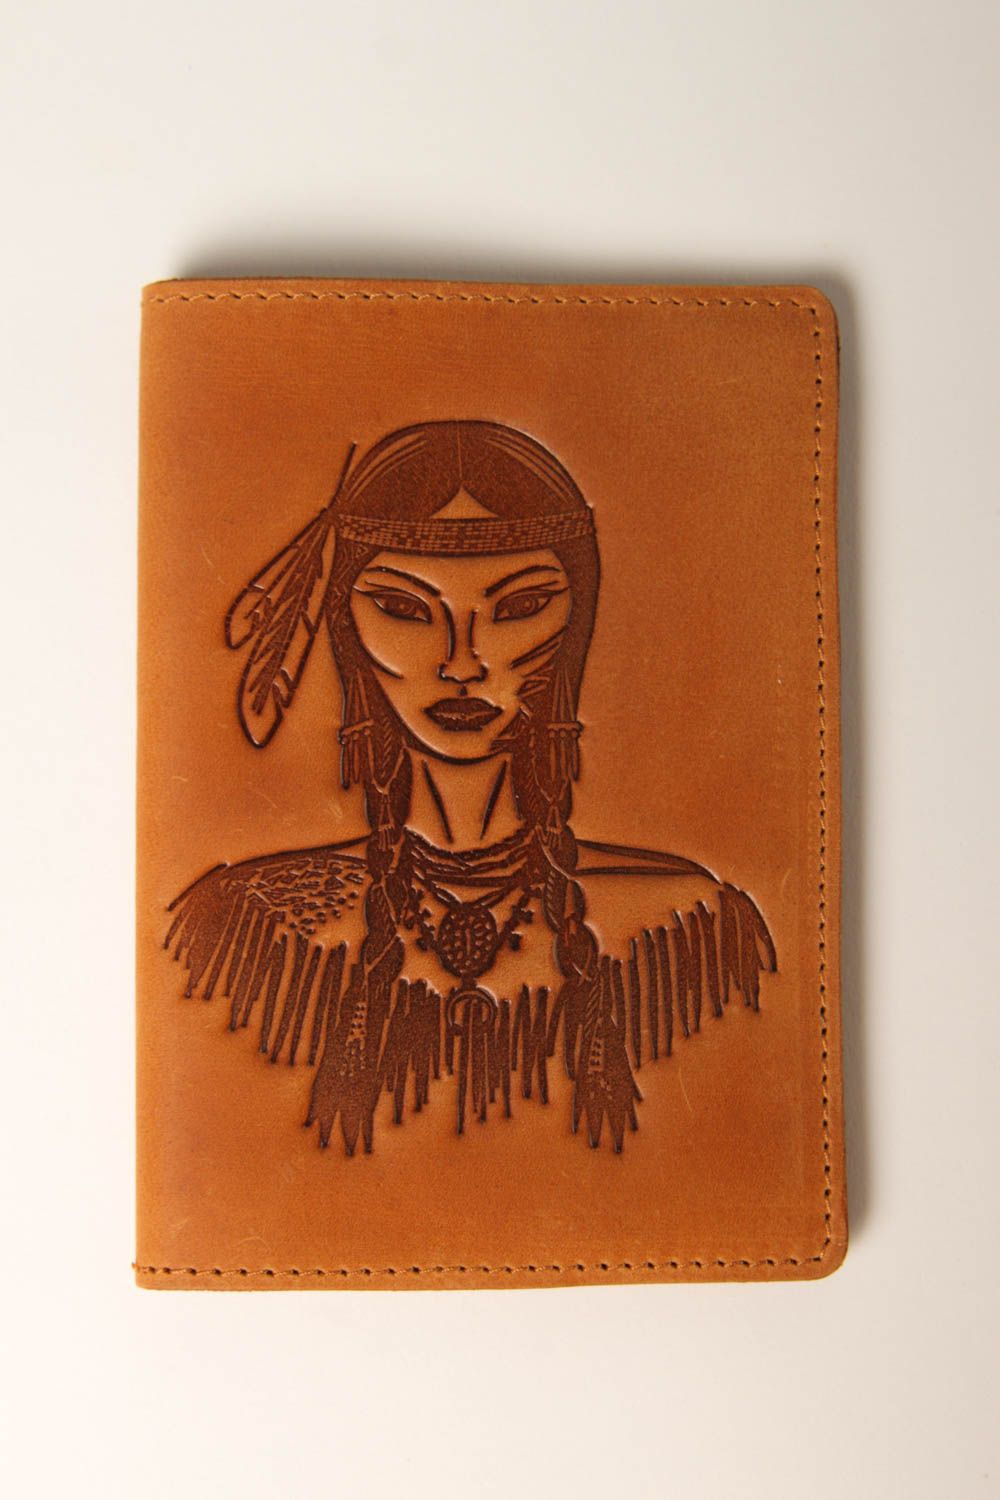 Unusual handmade passport cover leather goods handmade accessories gift ideas photo 2